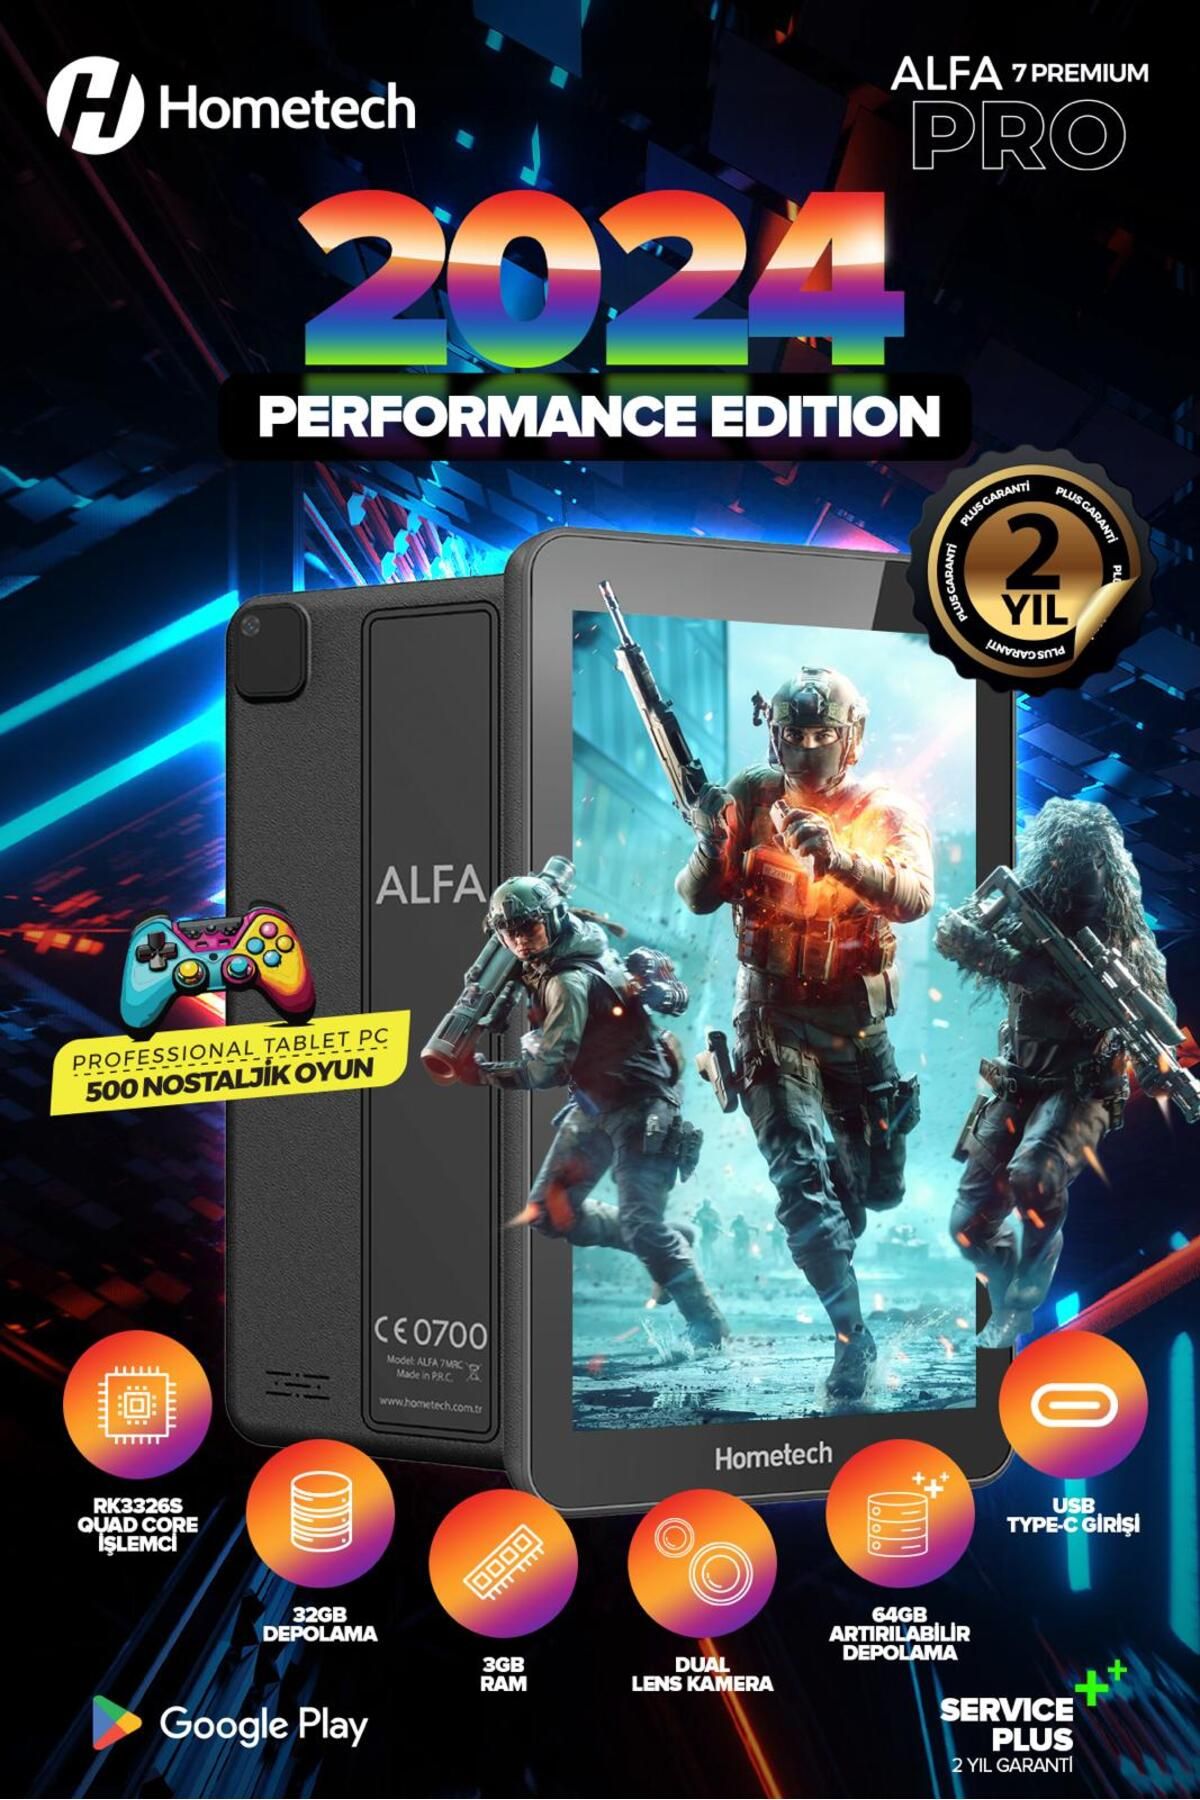 Hometech Alfa 7 Premium Pro 3 gb Ram 32 gb Hafıza Pro Oyun Tableti Uzaktan Eğitim Destekli